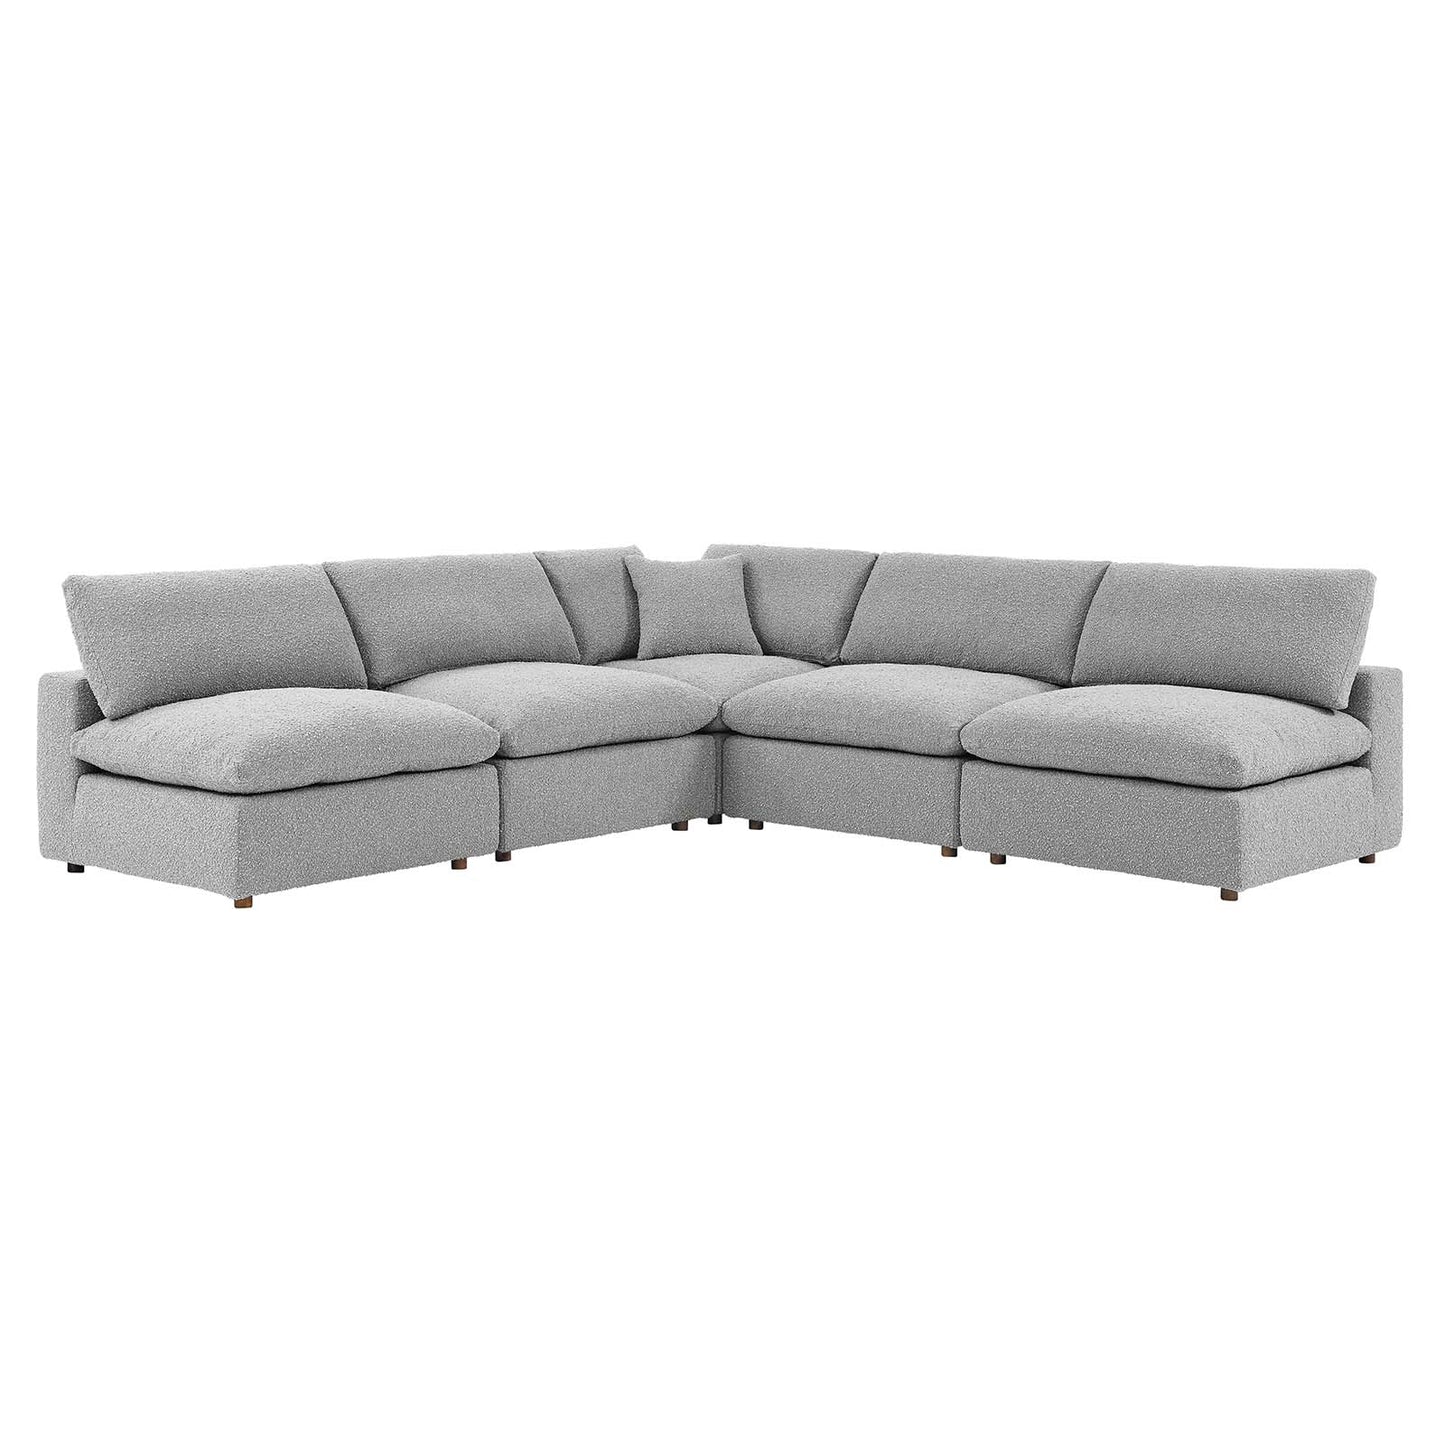 Commix Down Filled Overstuffed Boucle Fabric 5-Piece Sectional Sofa Light Gray EEI-6367-LGR